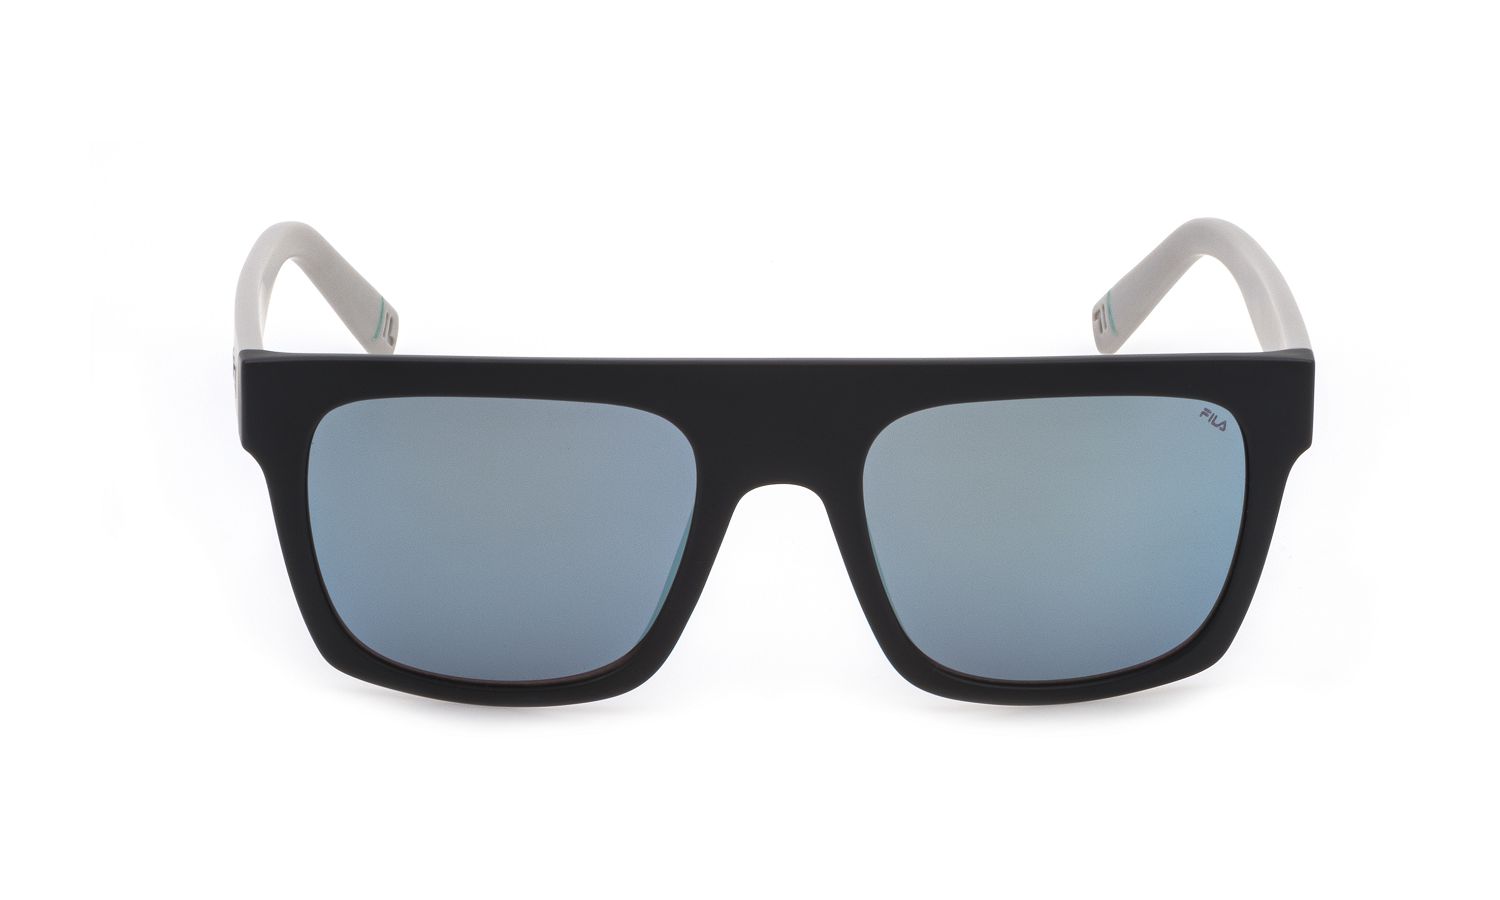 Fila sunglasses SF9922 531Z